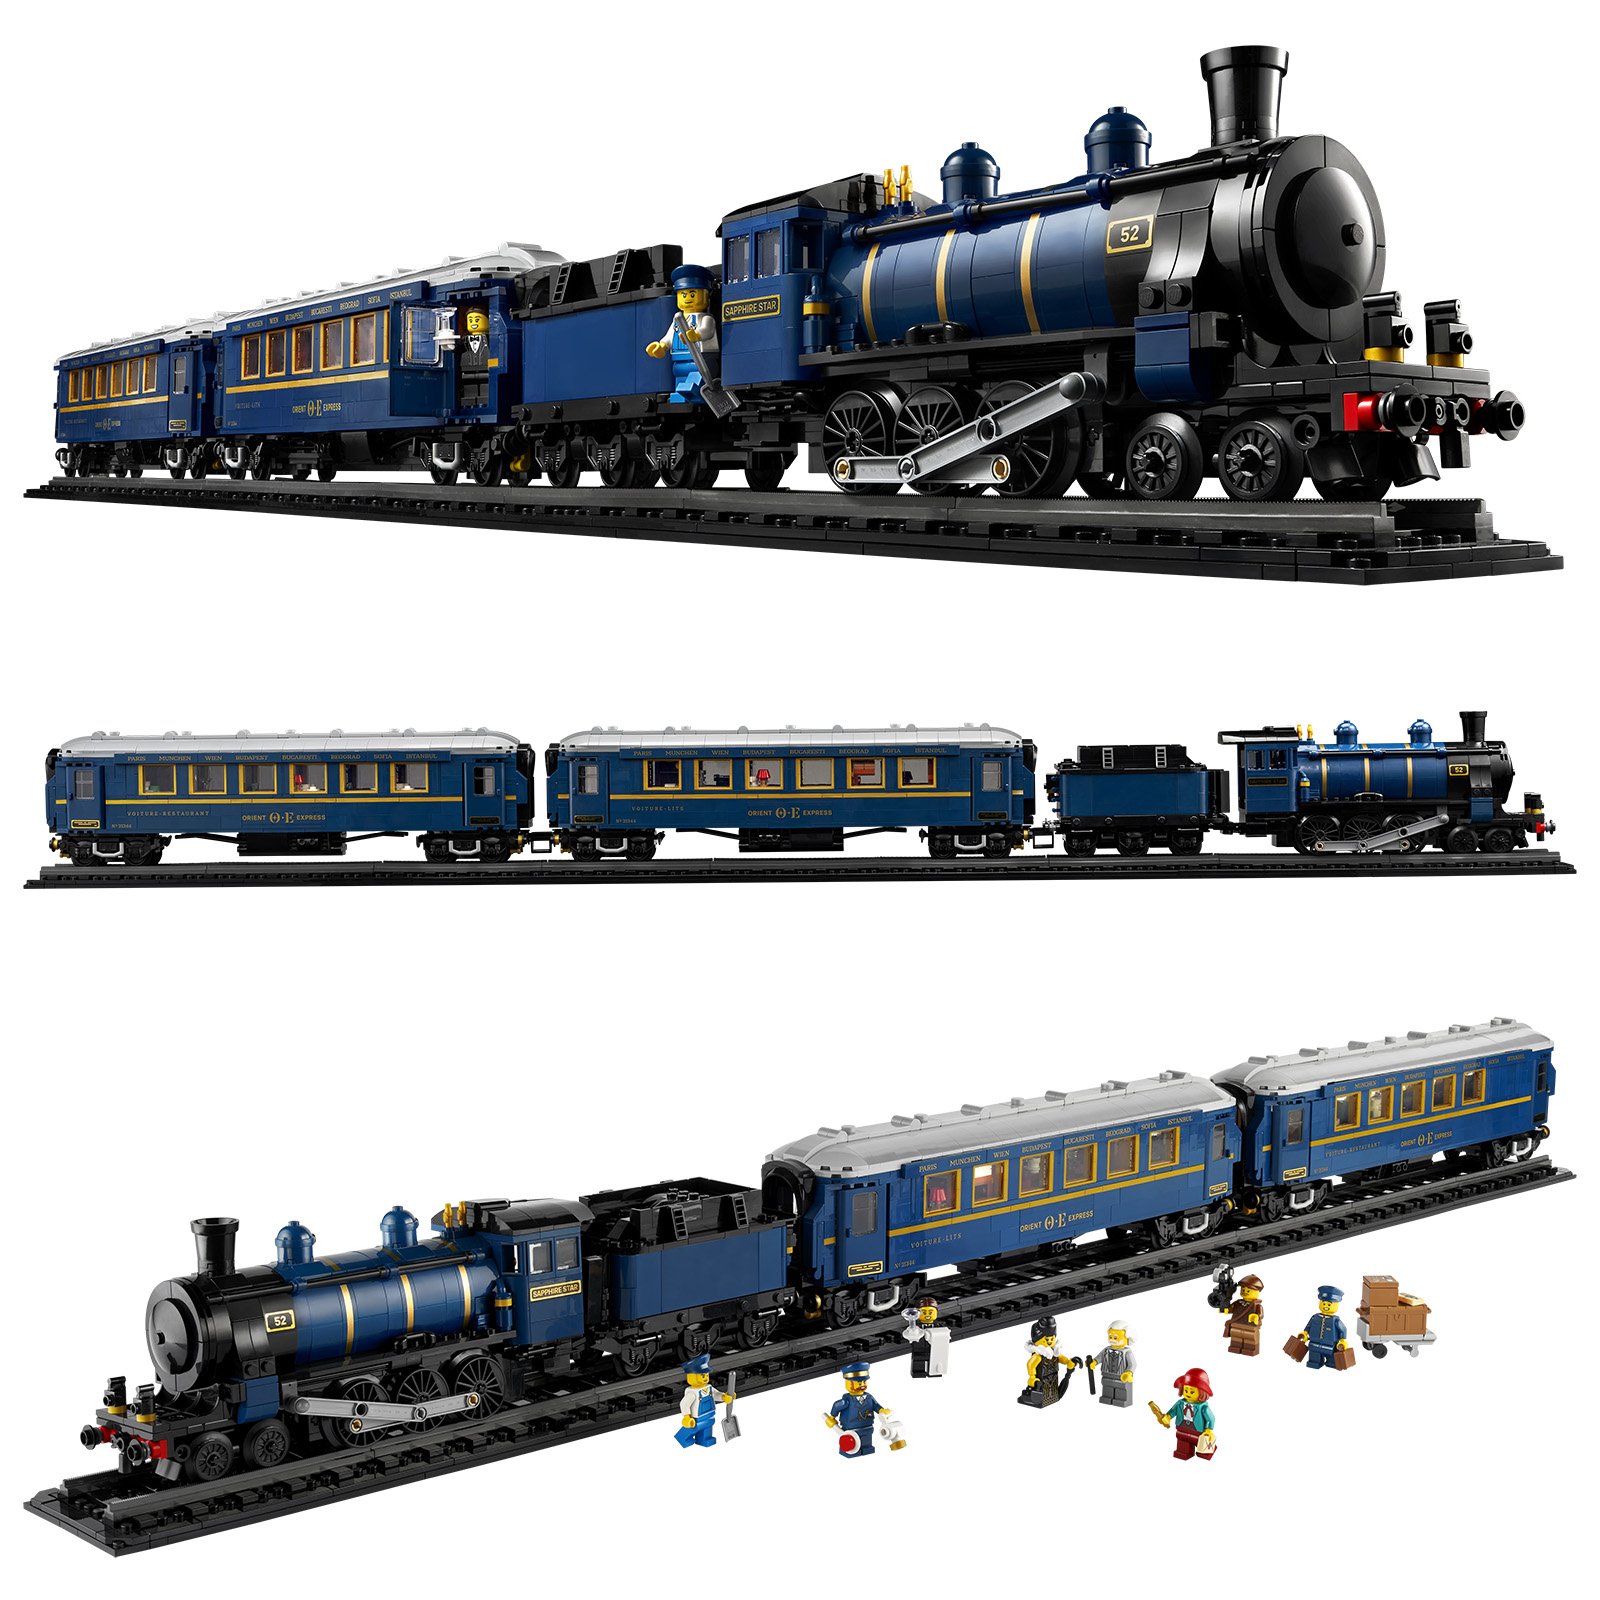 REVIEW: LEGO Orient Express Train Set 21344 